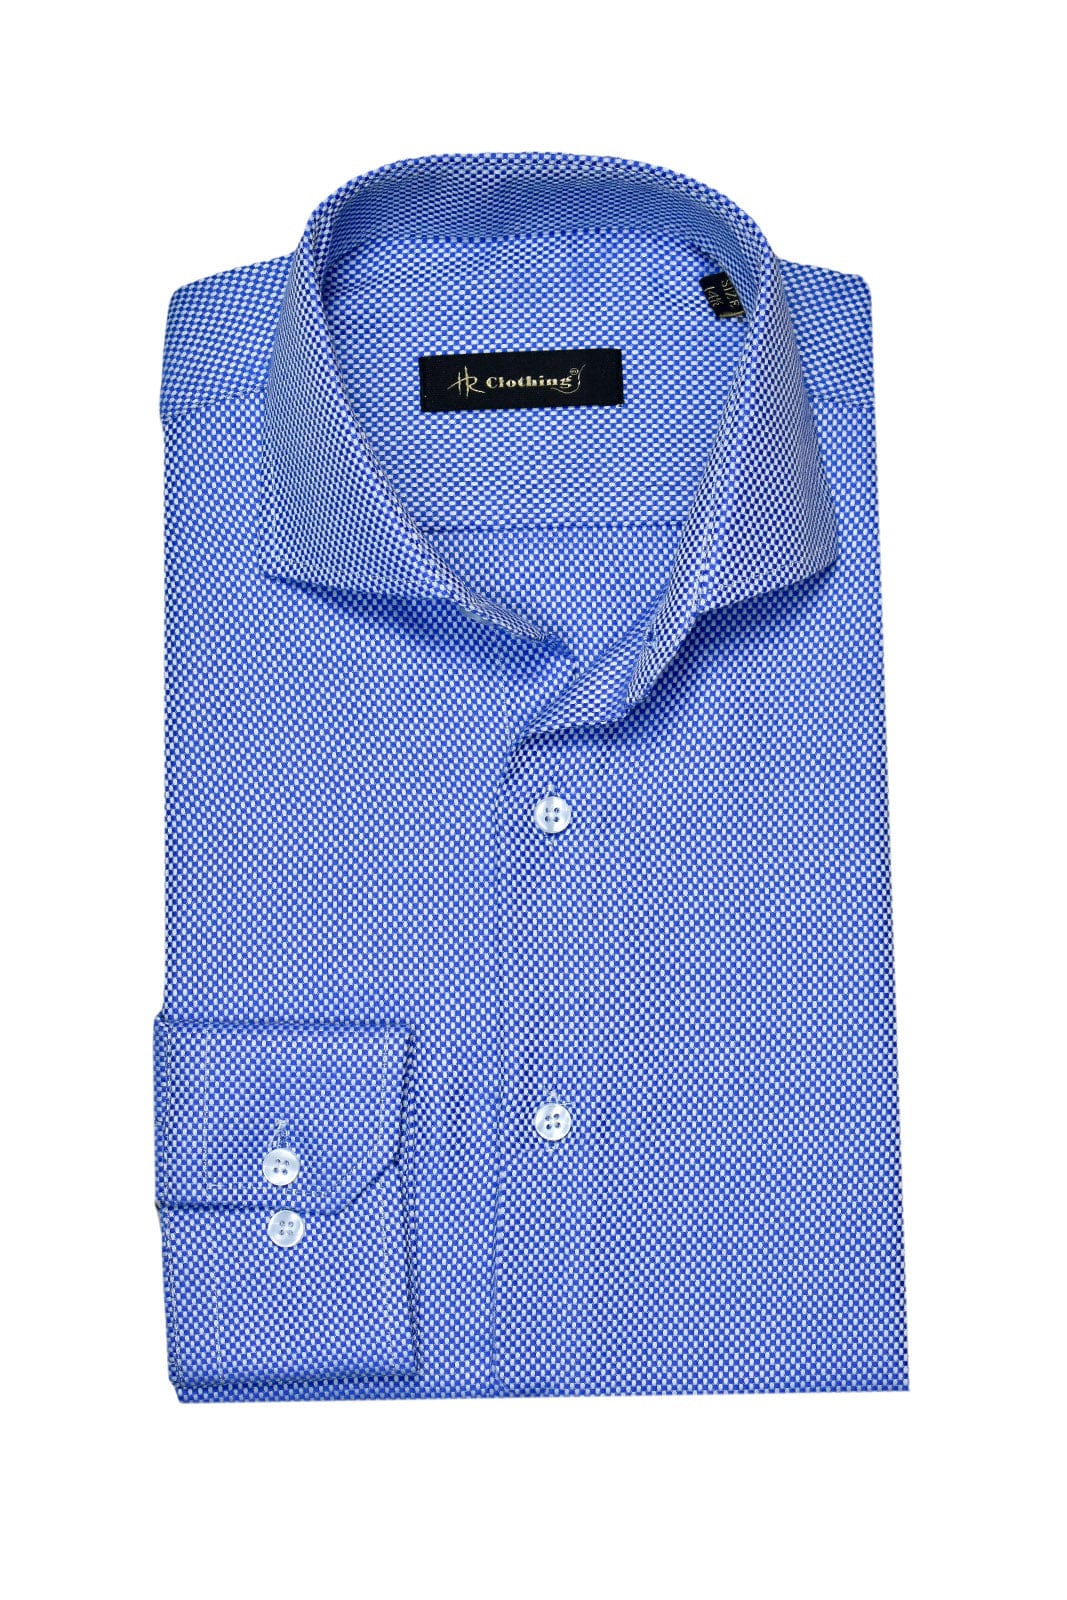 Formal Shirt Dsh-0141 Texture Blue